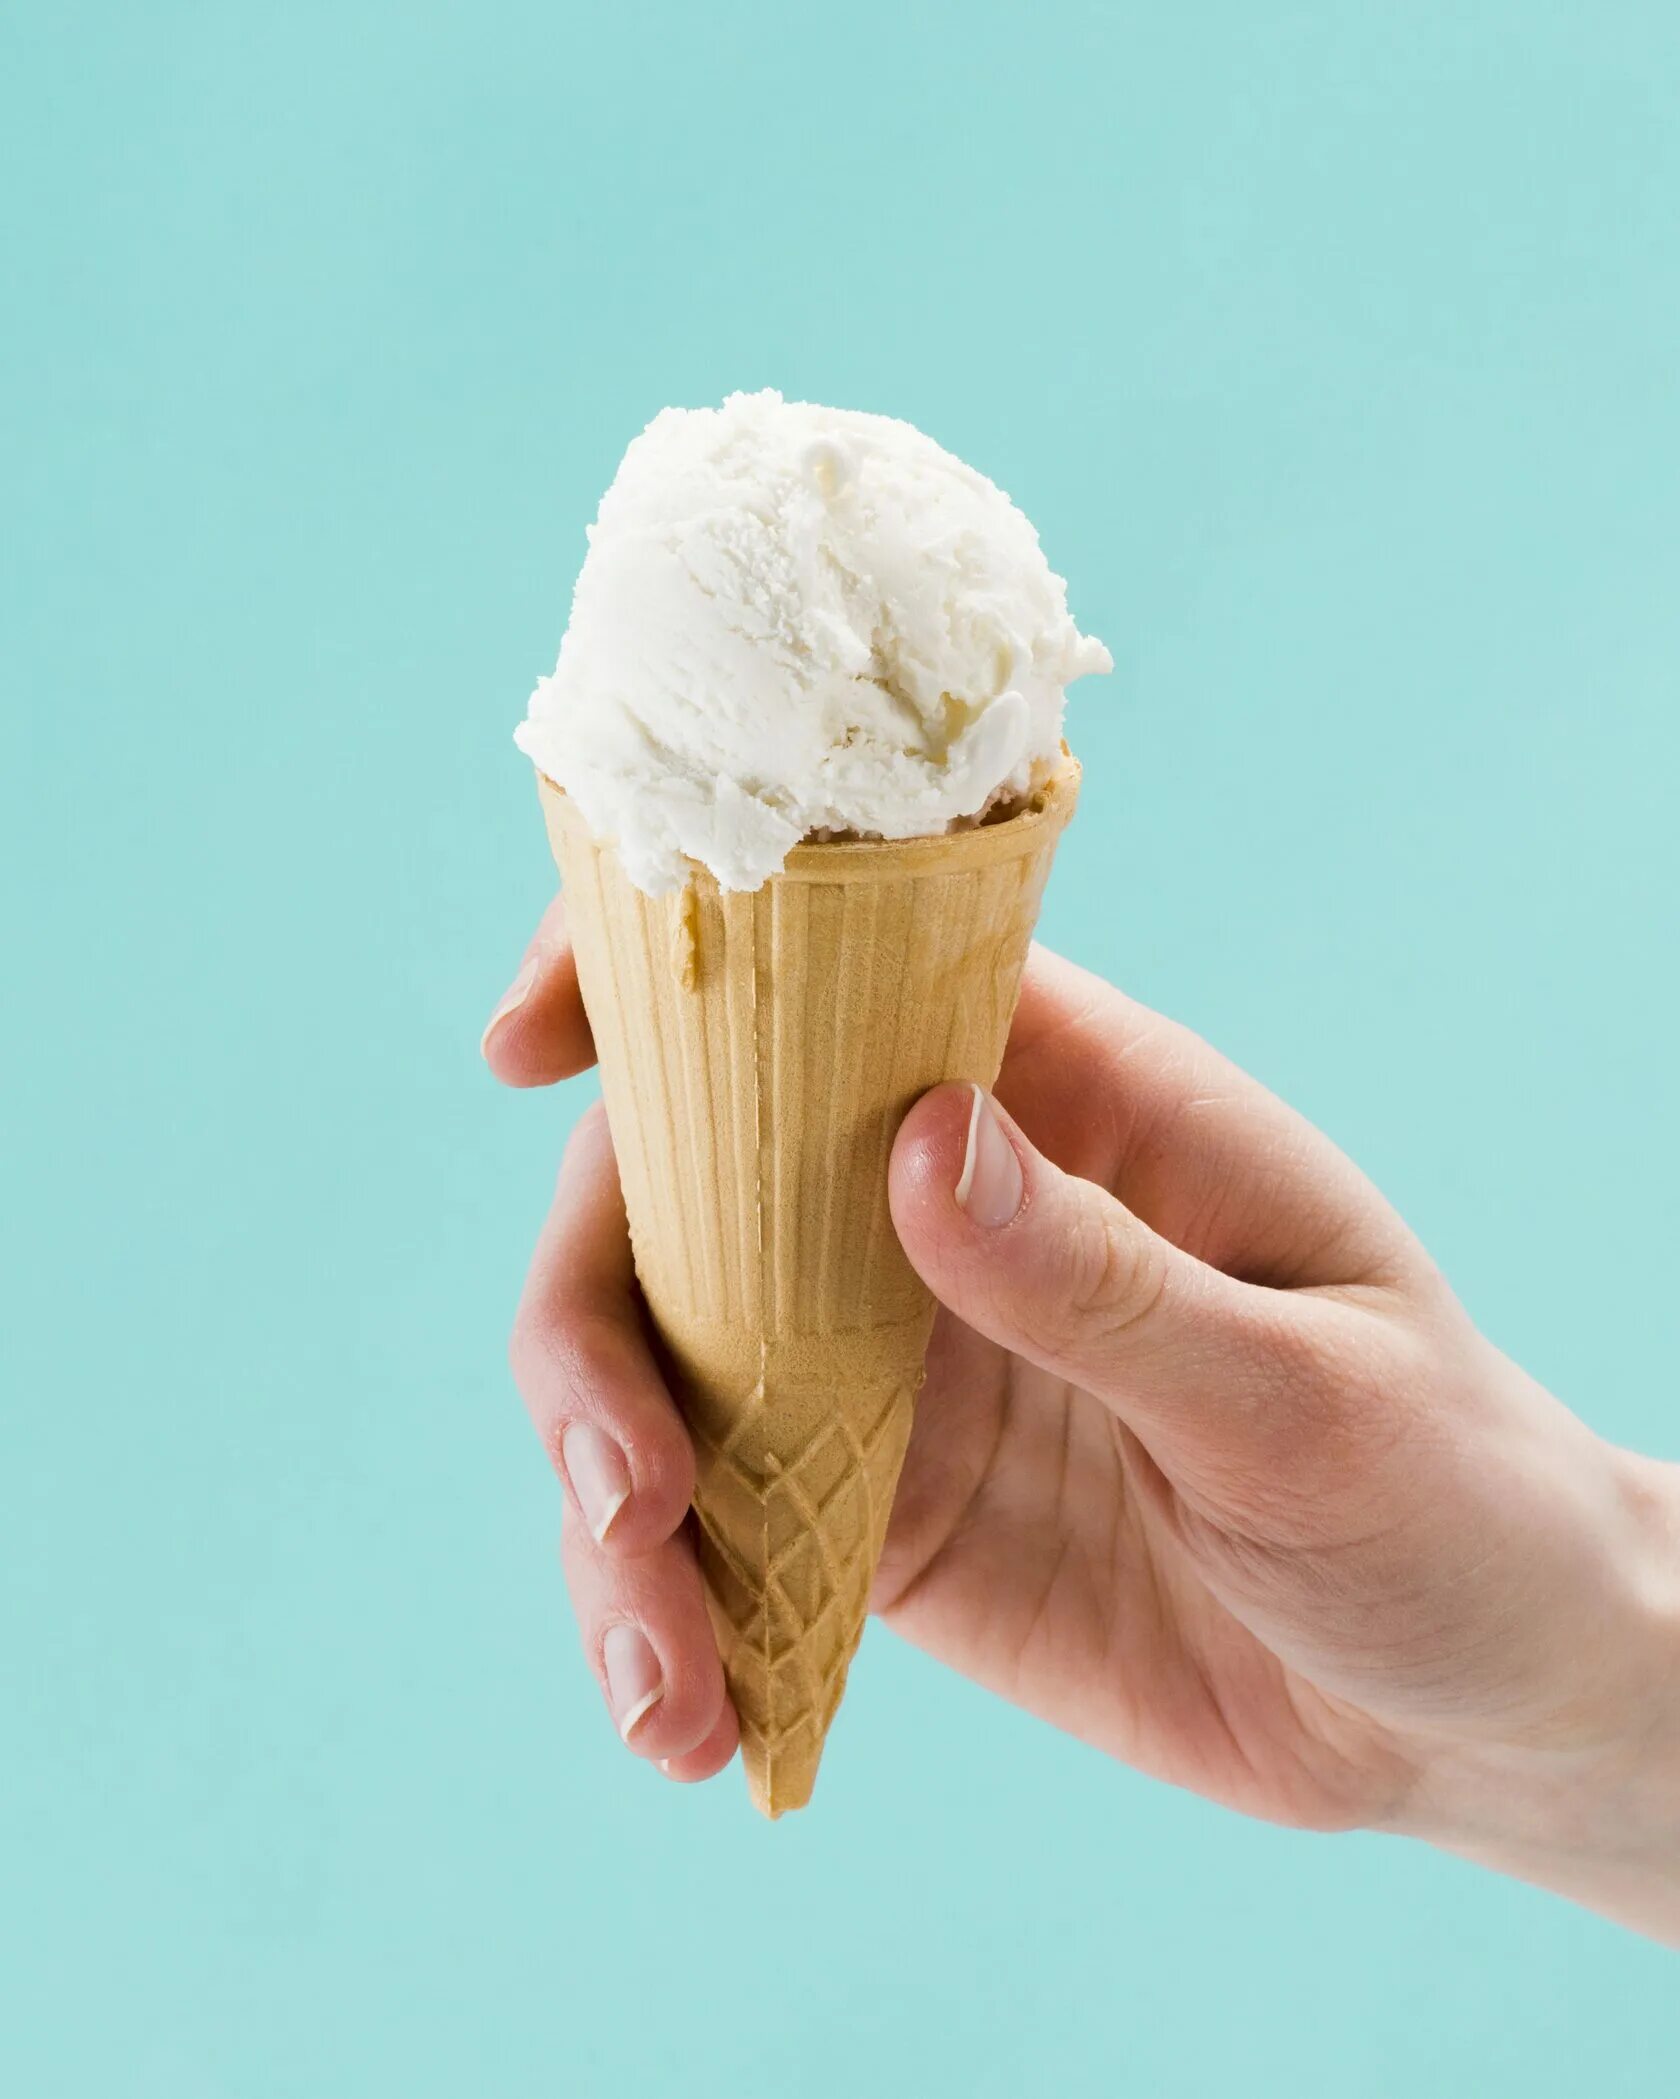 Cream like. Мороженое ваниль. Мороженое рожок в руке. Держит мороженое. Рука держит мороженое.